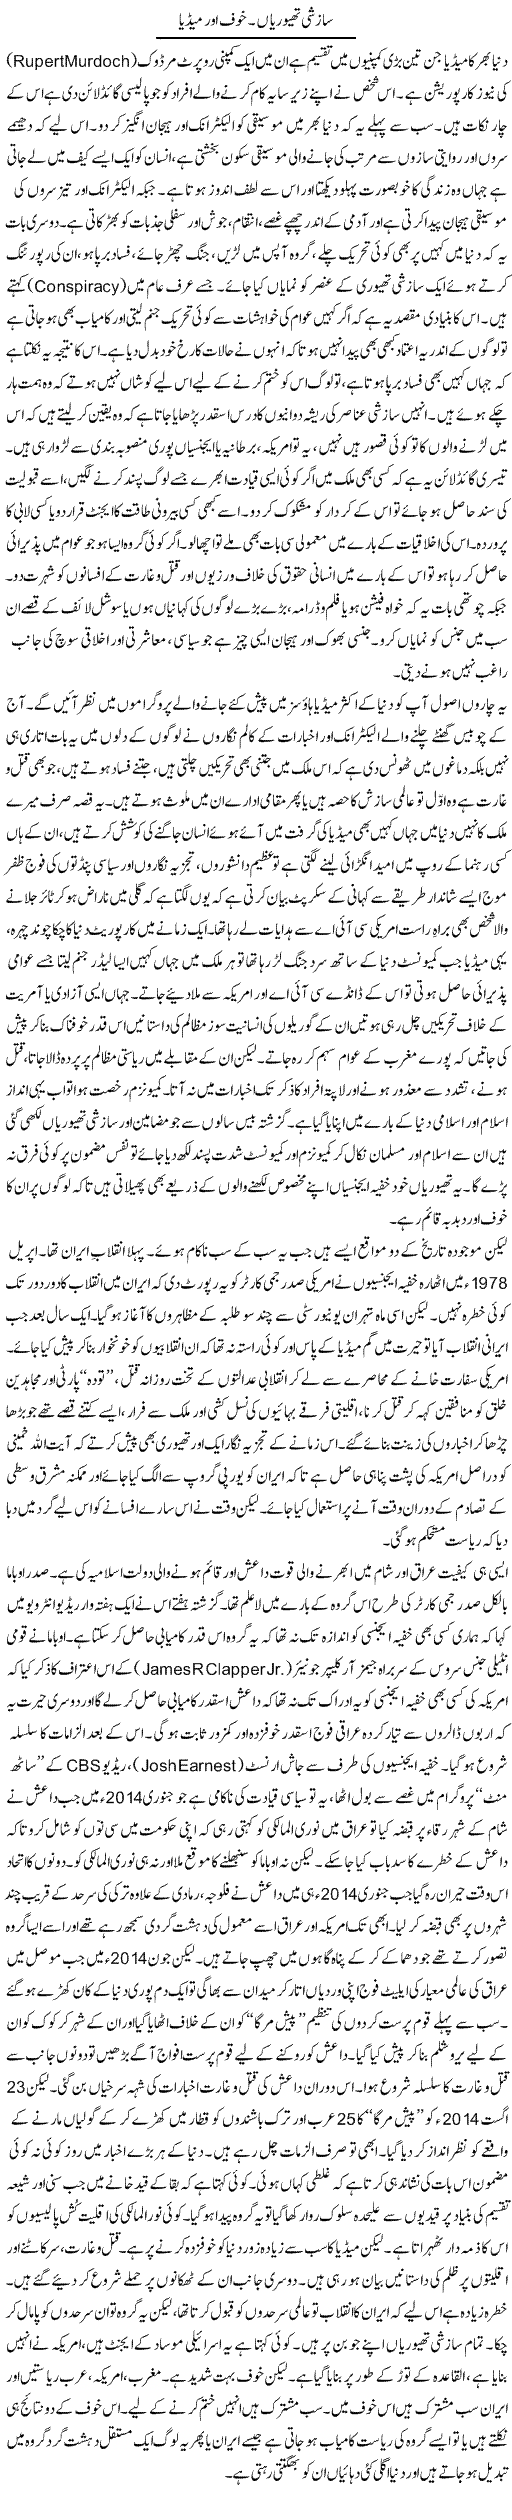 Sazshi Theorian. Khauf Our Media | Orya Maqbool Jan | Daily Urdu Columns